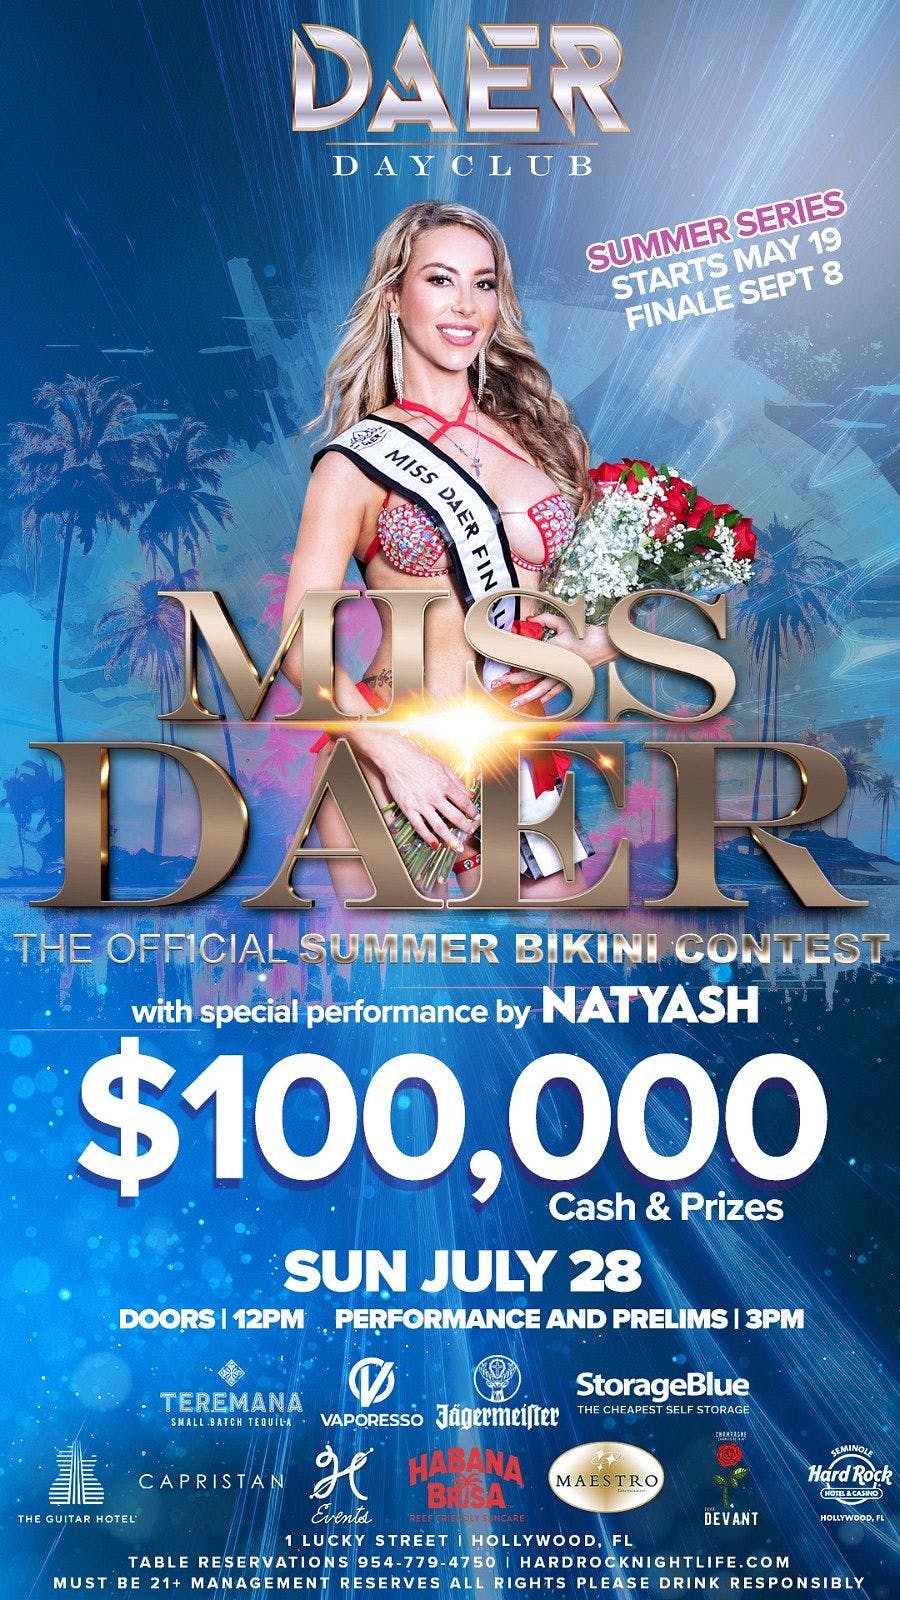 Miss DAER Party | DAER Dayclub